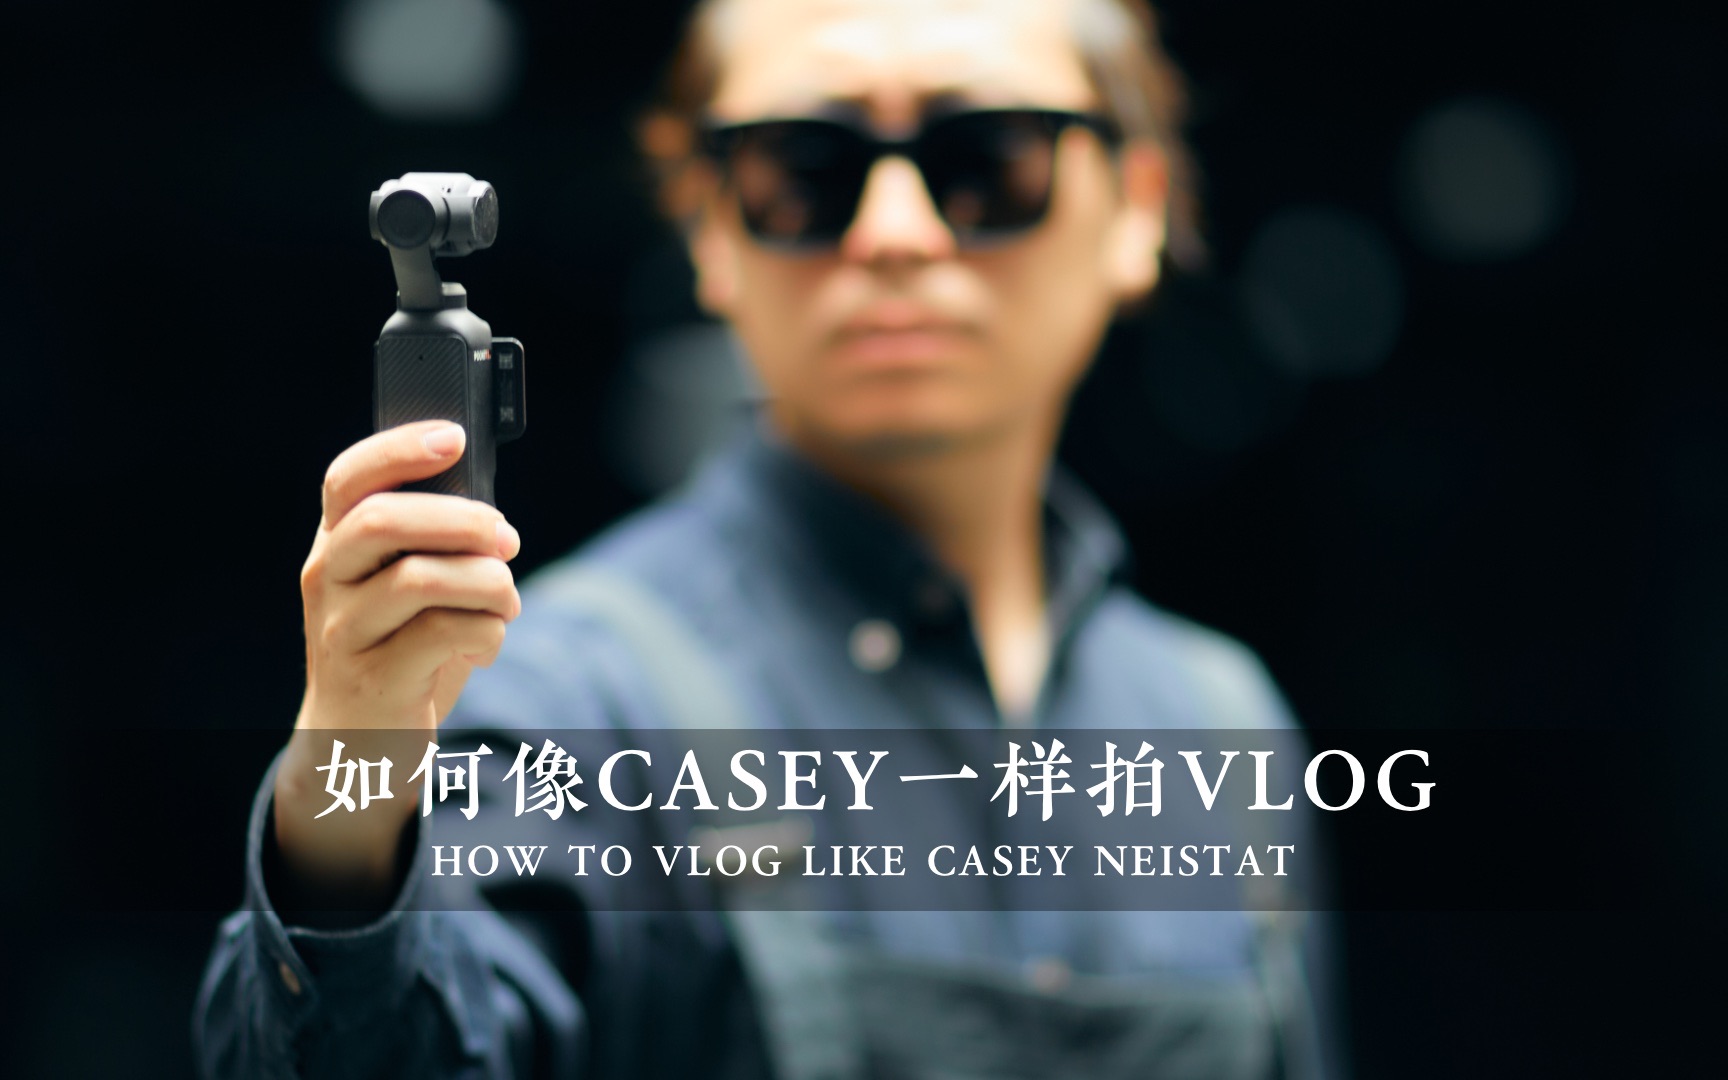 如何像“VLOG之神”Casey一样拍VLOG?  - By DJI Pocket3